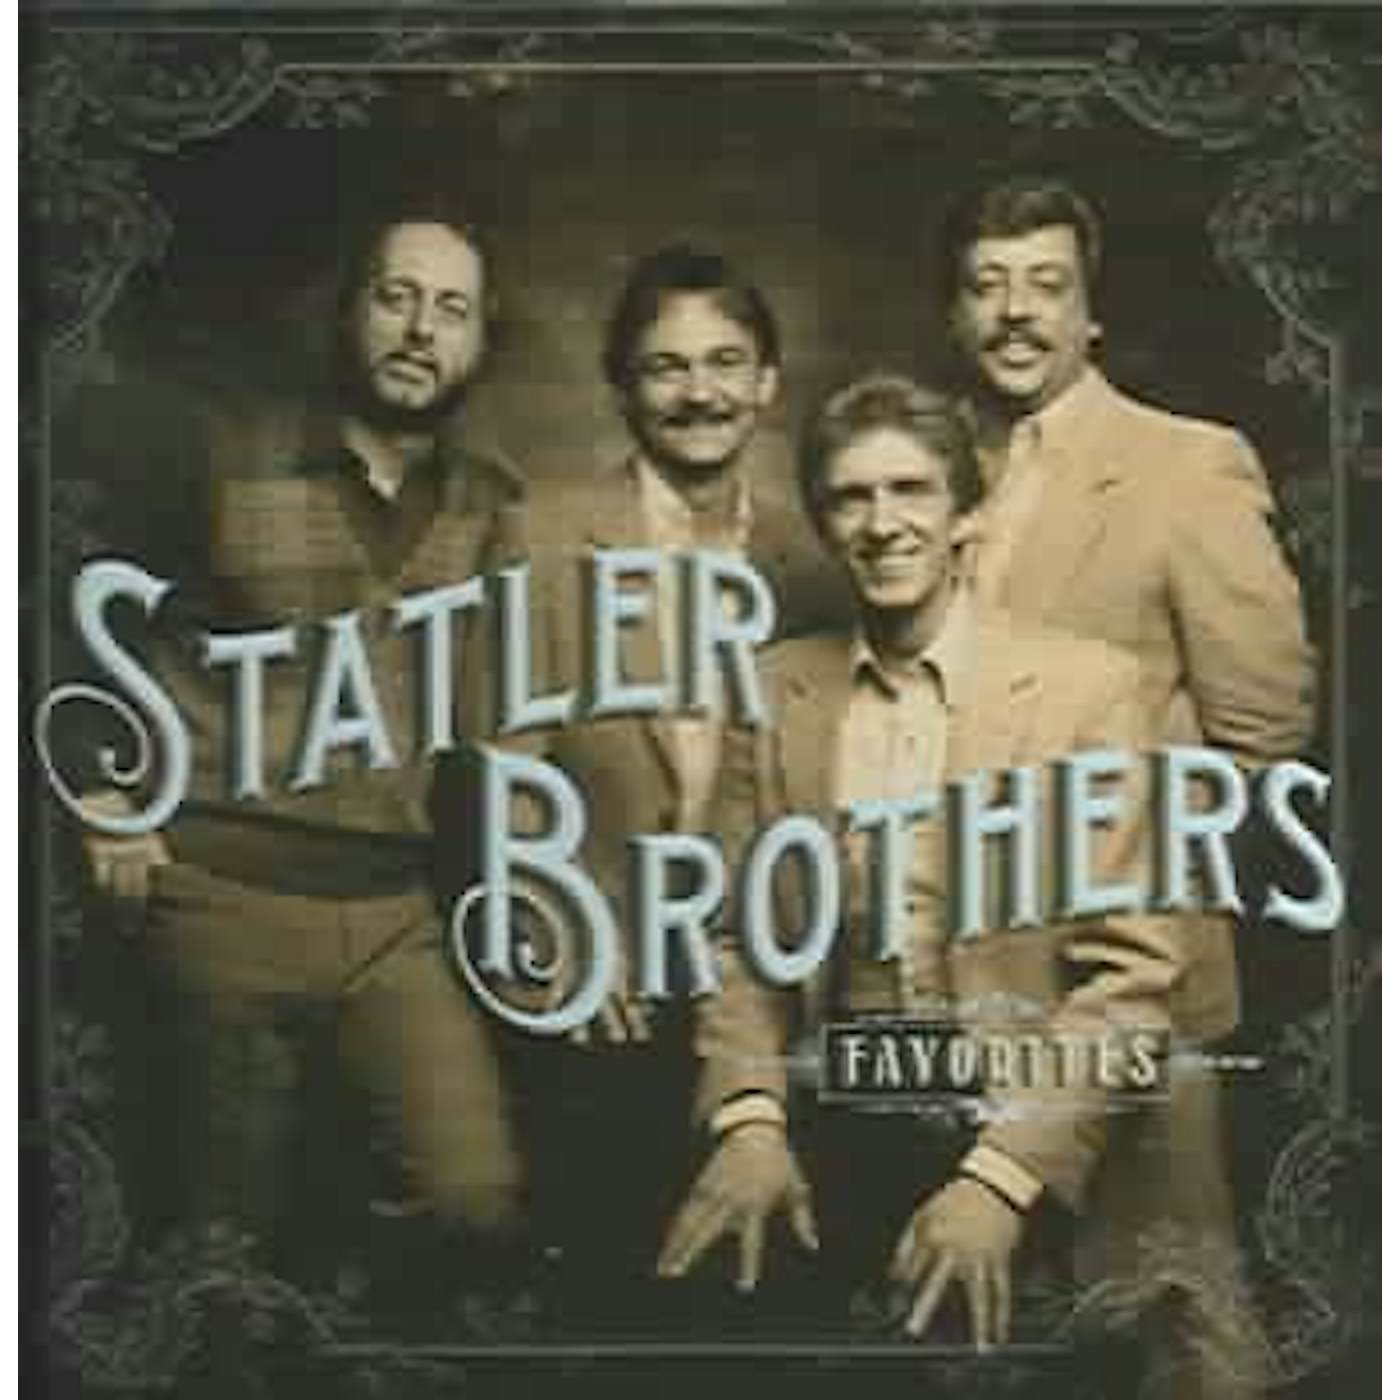 The Statler Brothers Favorites CD